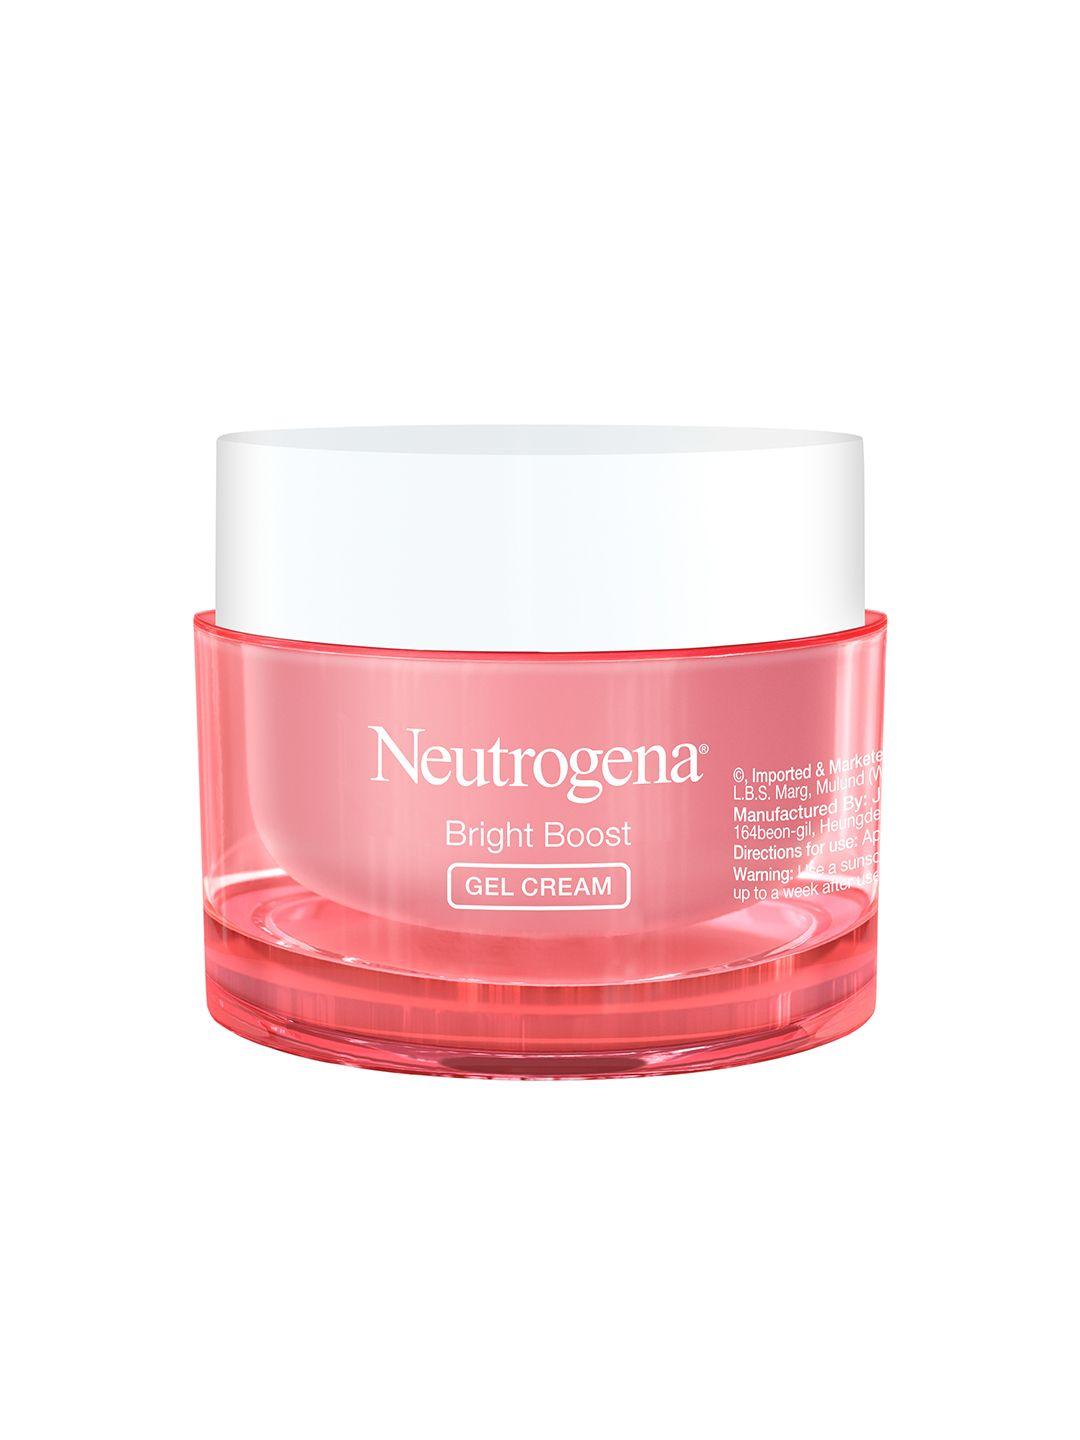 neutrogena bright boost gel cream - 15g